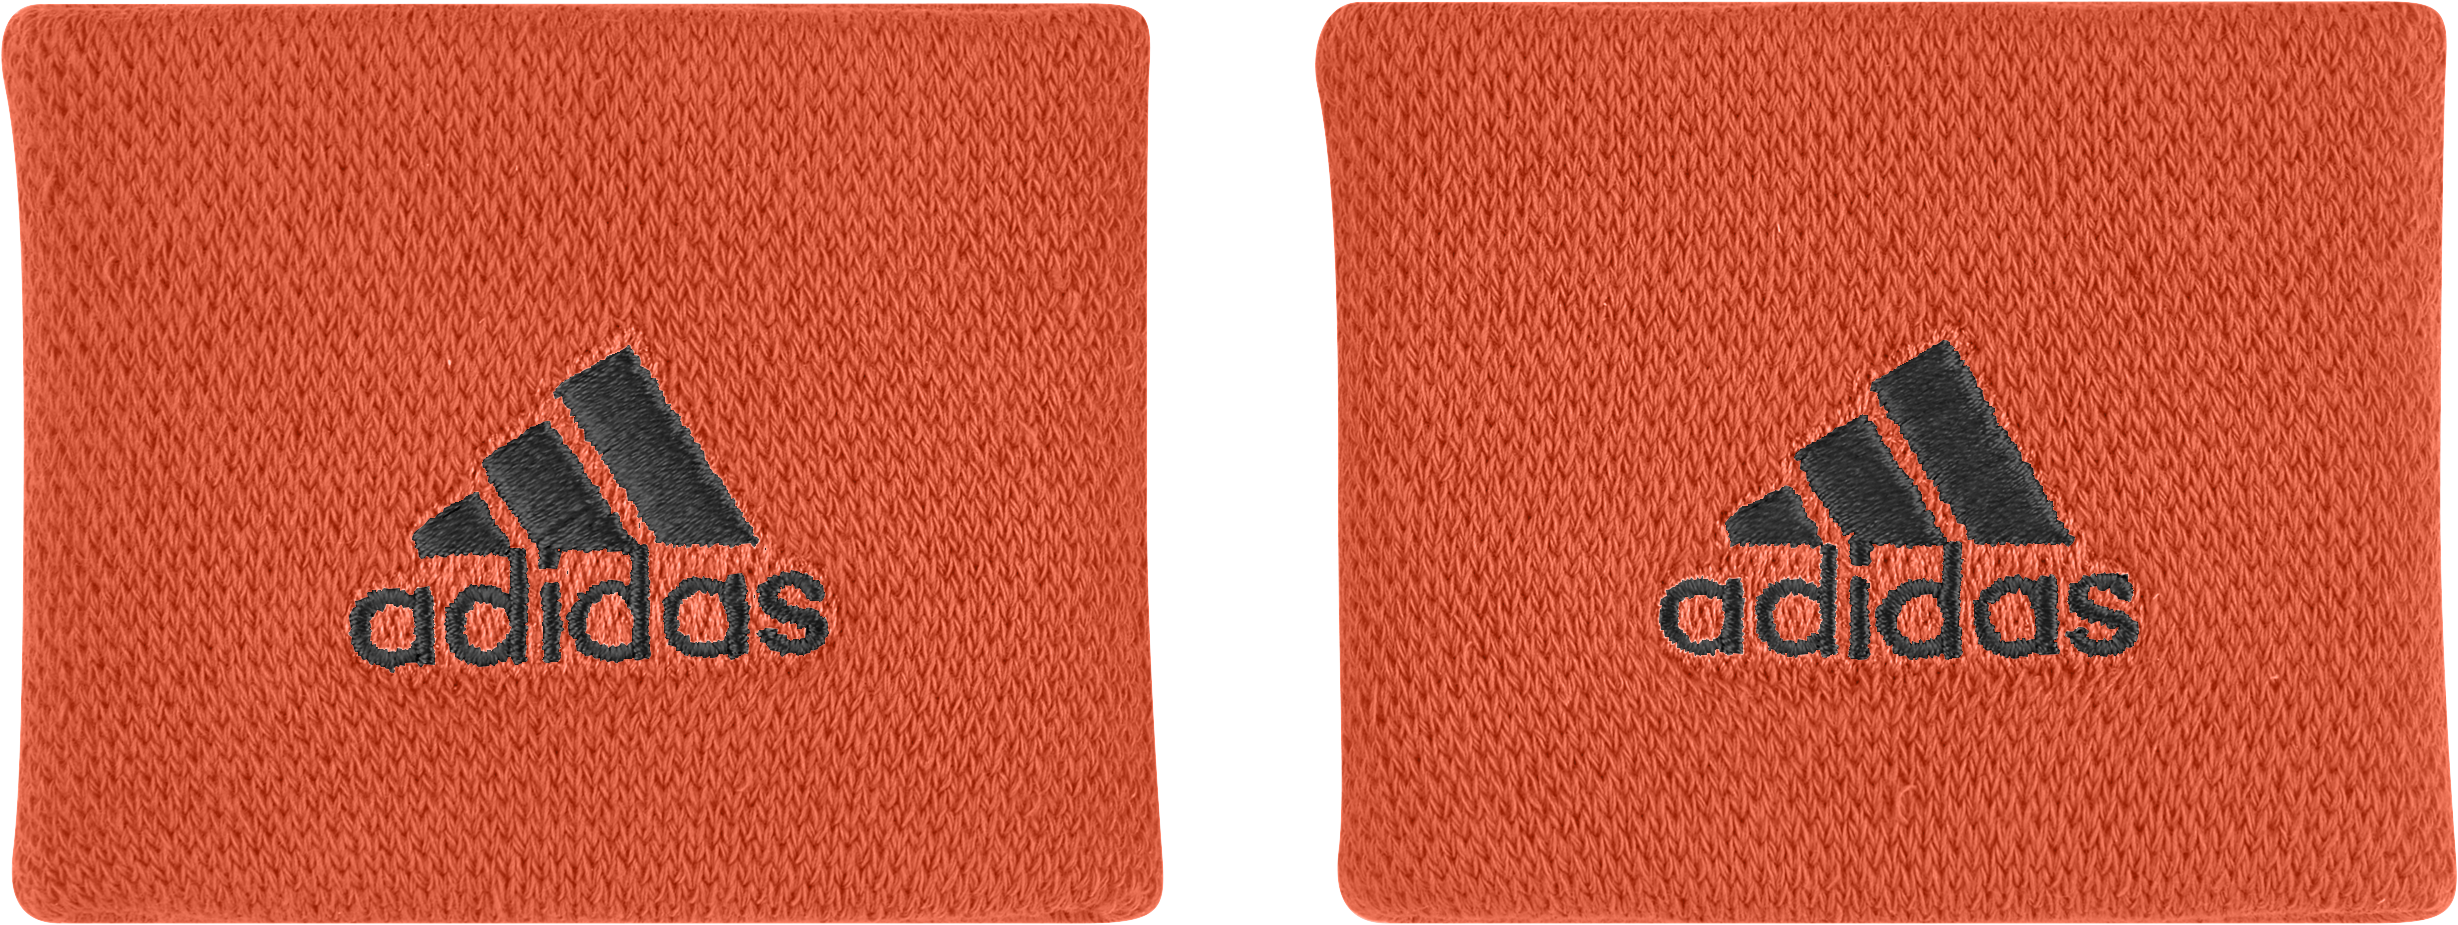 Adidas Polsbandjes Klein (Semi Impact Oranje/Zwart)